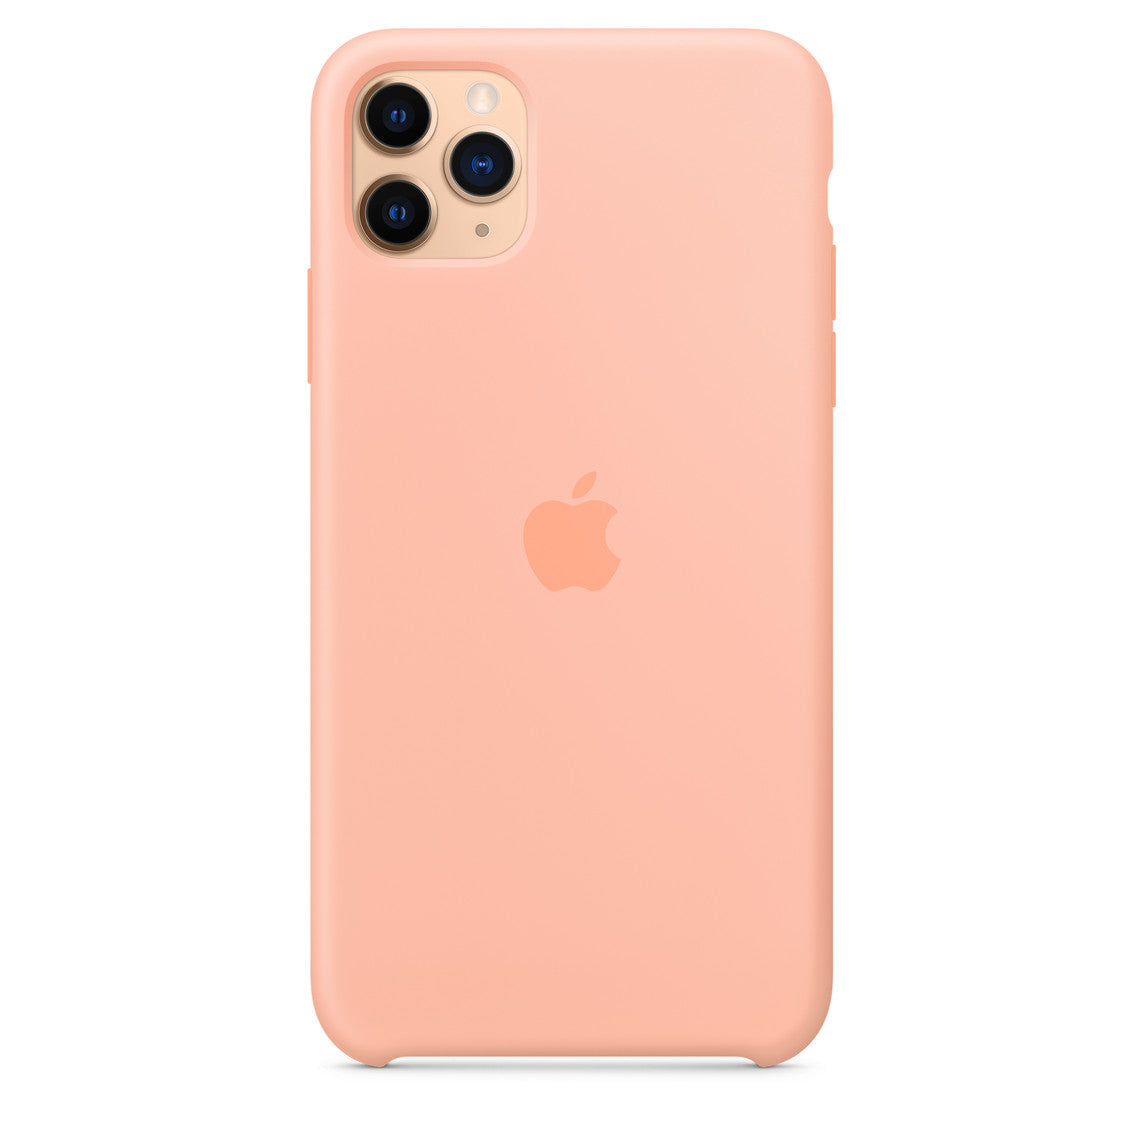 Apple iPhone 11 Pro Max 64GB Gold Gut Ohne Vertrag mit Apple iPhone 11 Pro Max Silikonhülle – Grapefruit